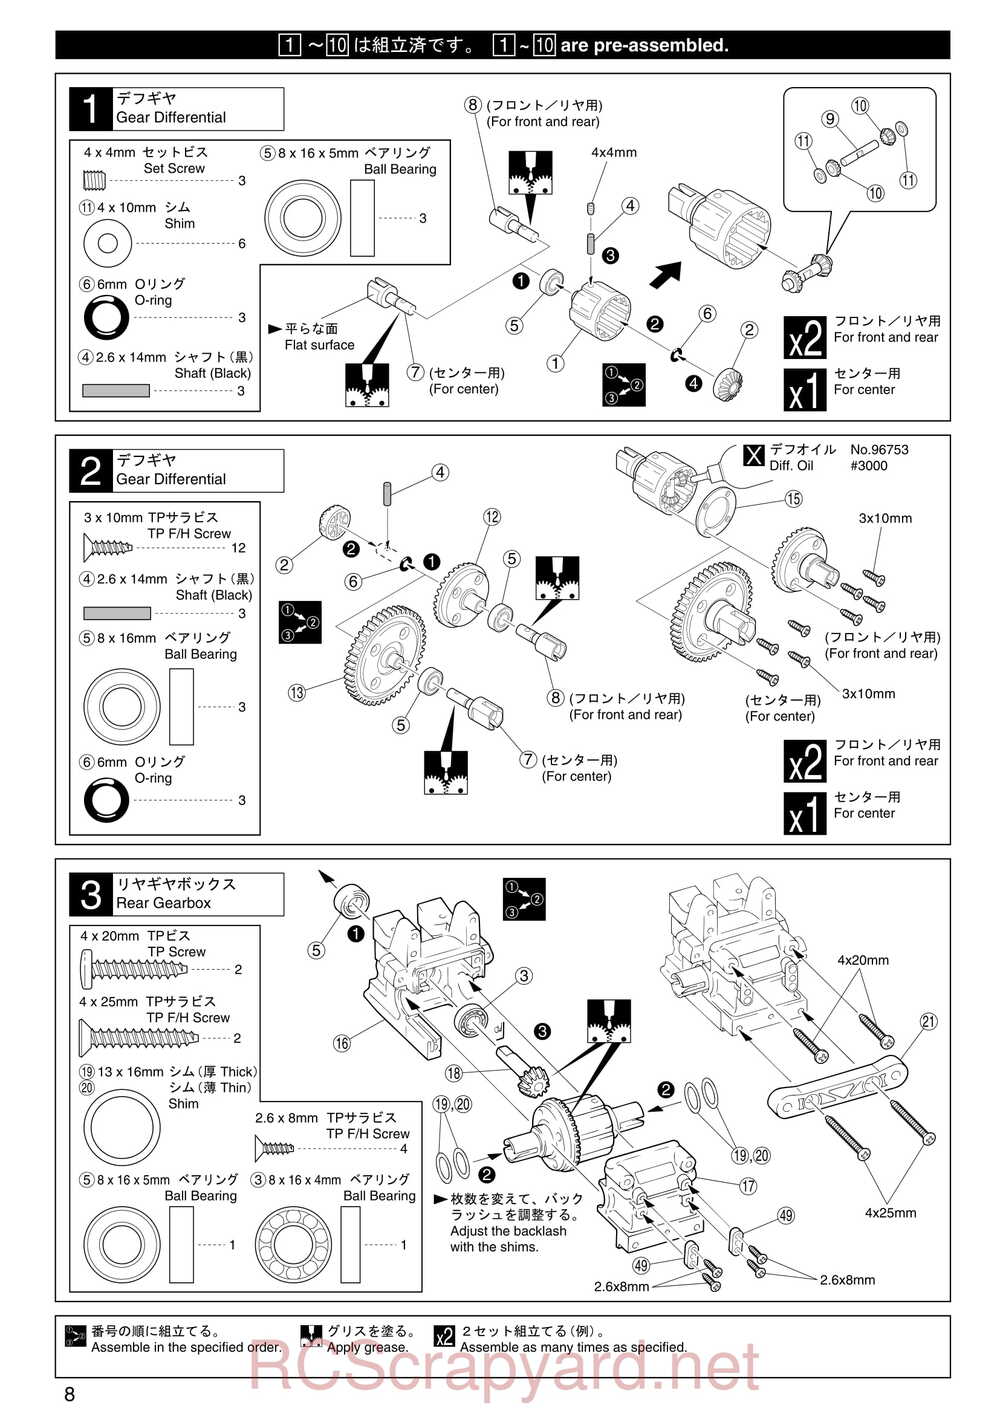 Kyosho - 31192 - Inferno-MP-7-5 Sports - Manual - Page 08